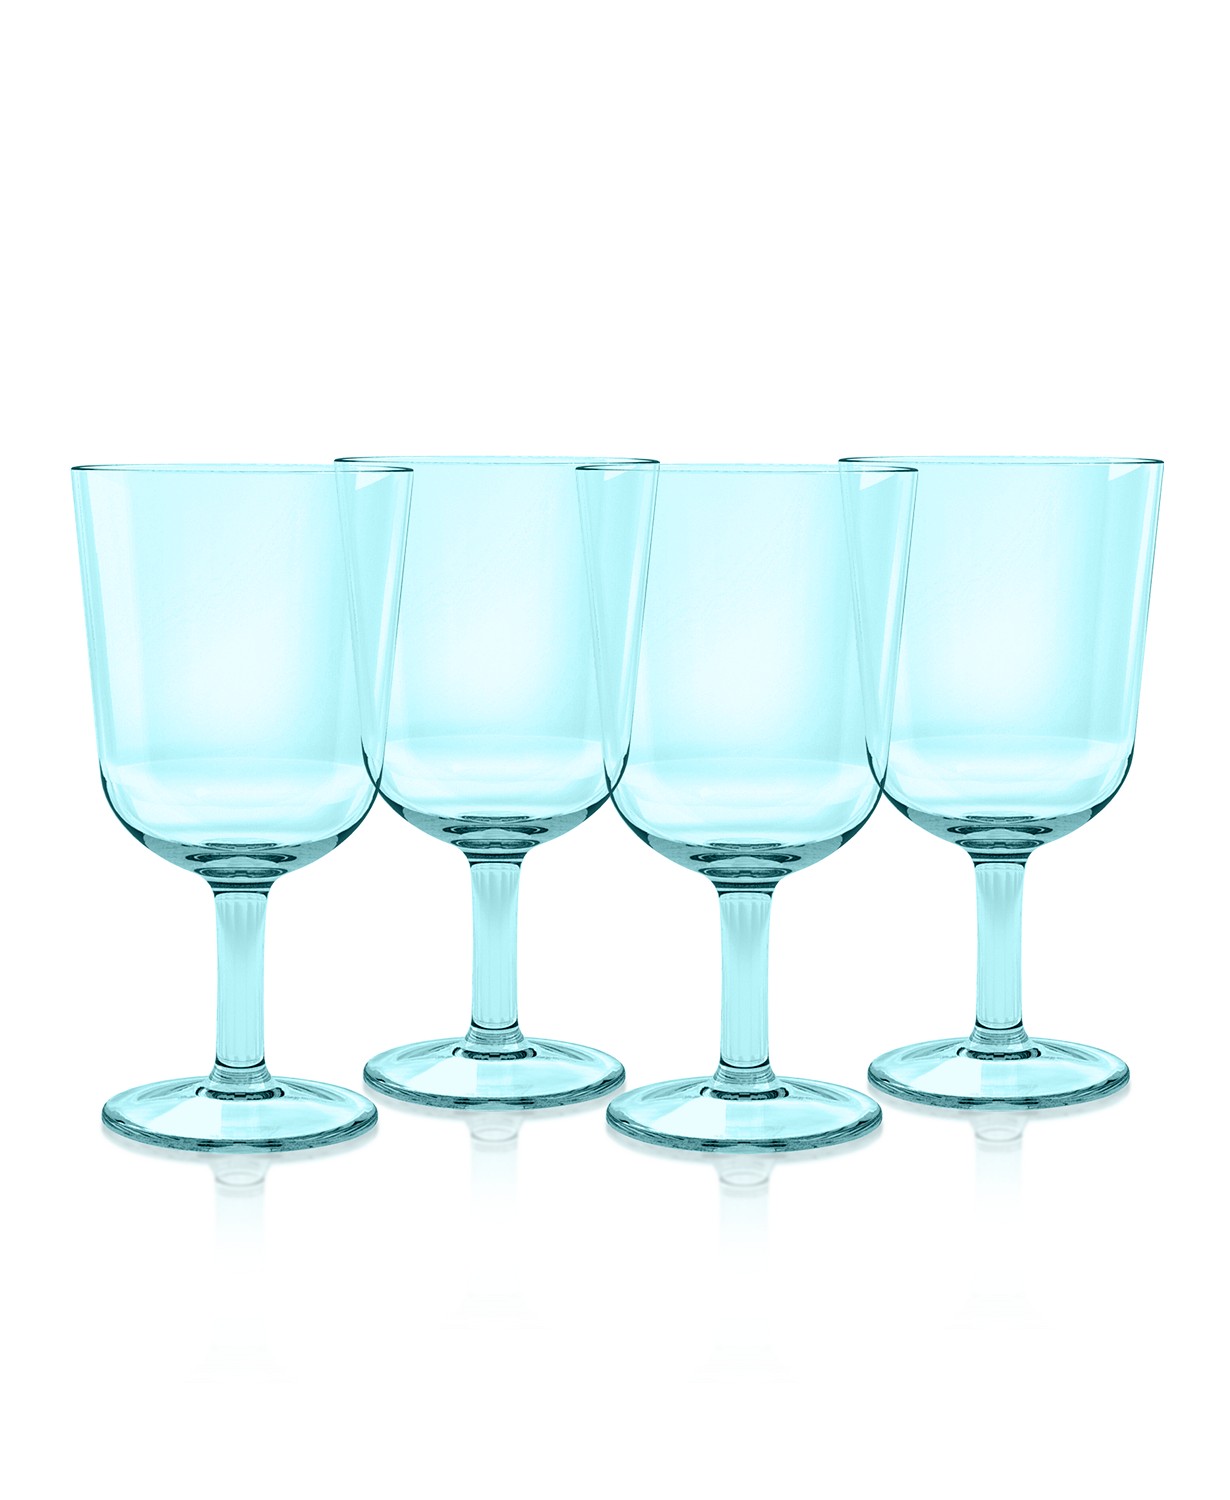 macys.com | Plastic Wine Glasses